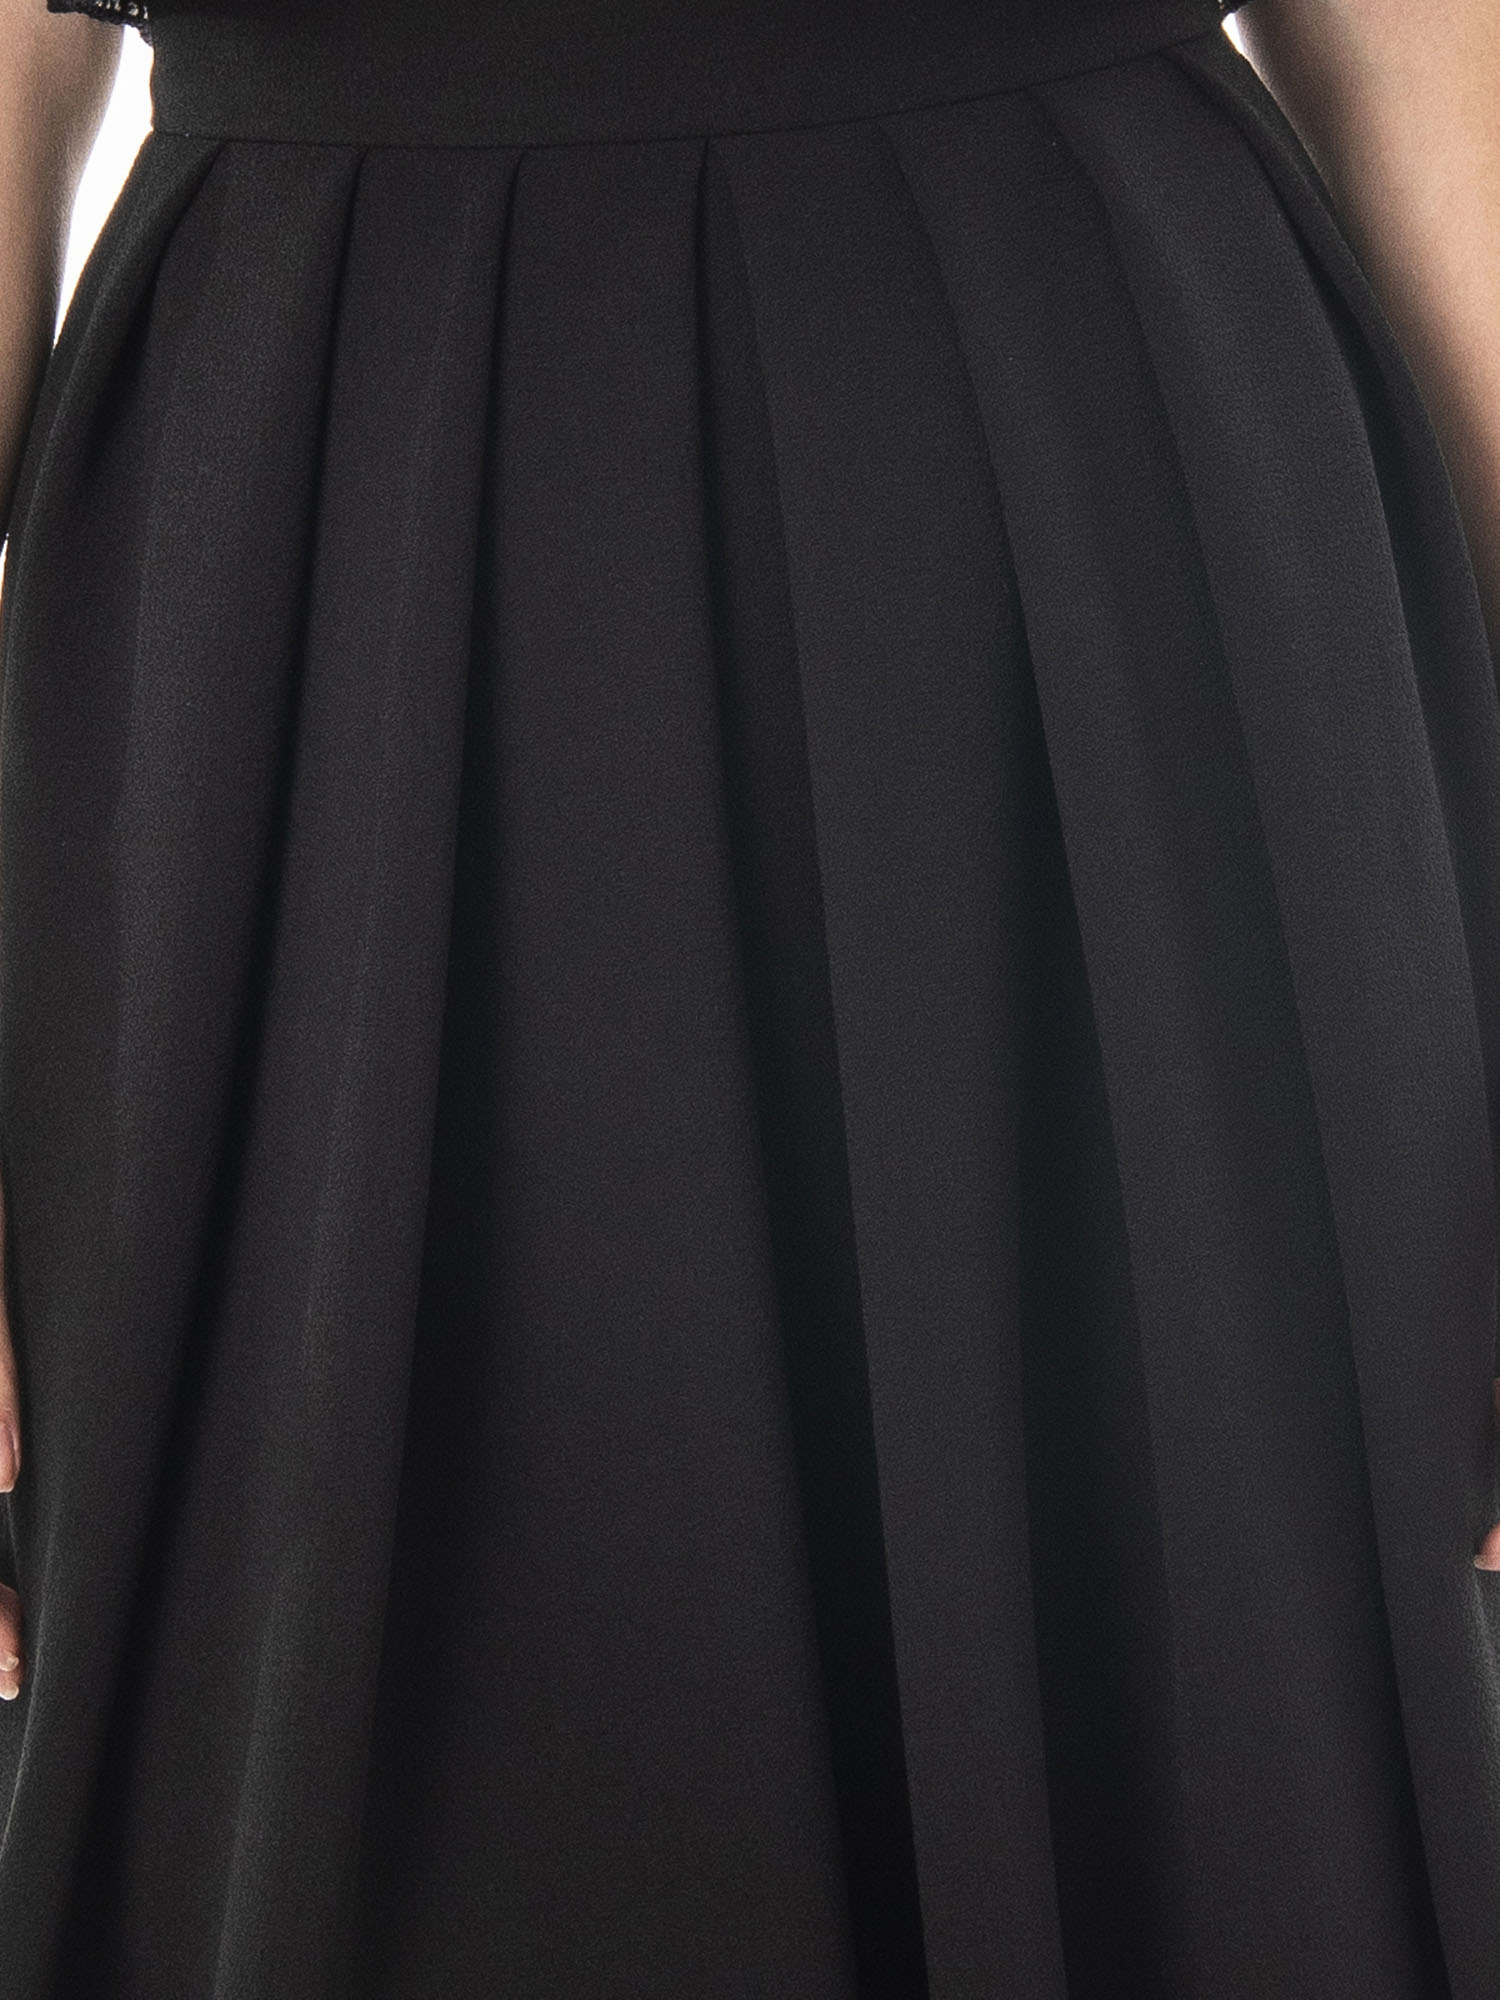 Black pleated skirt detail • Sassa Björg